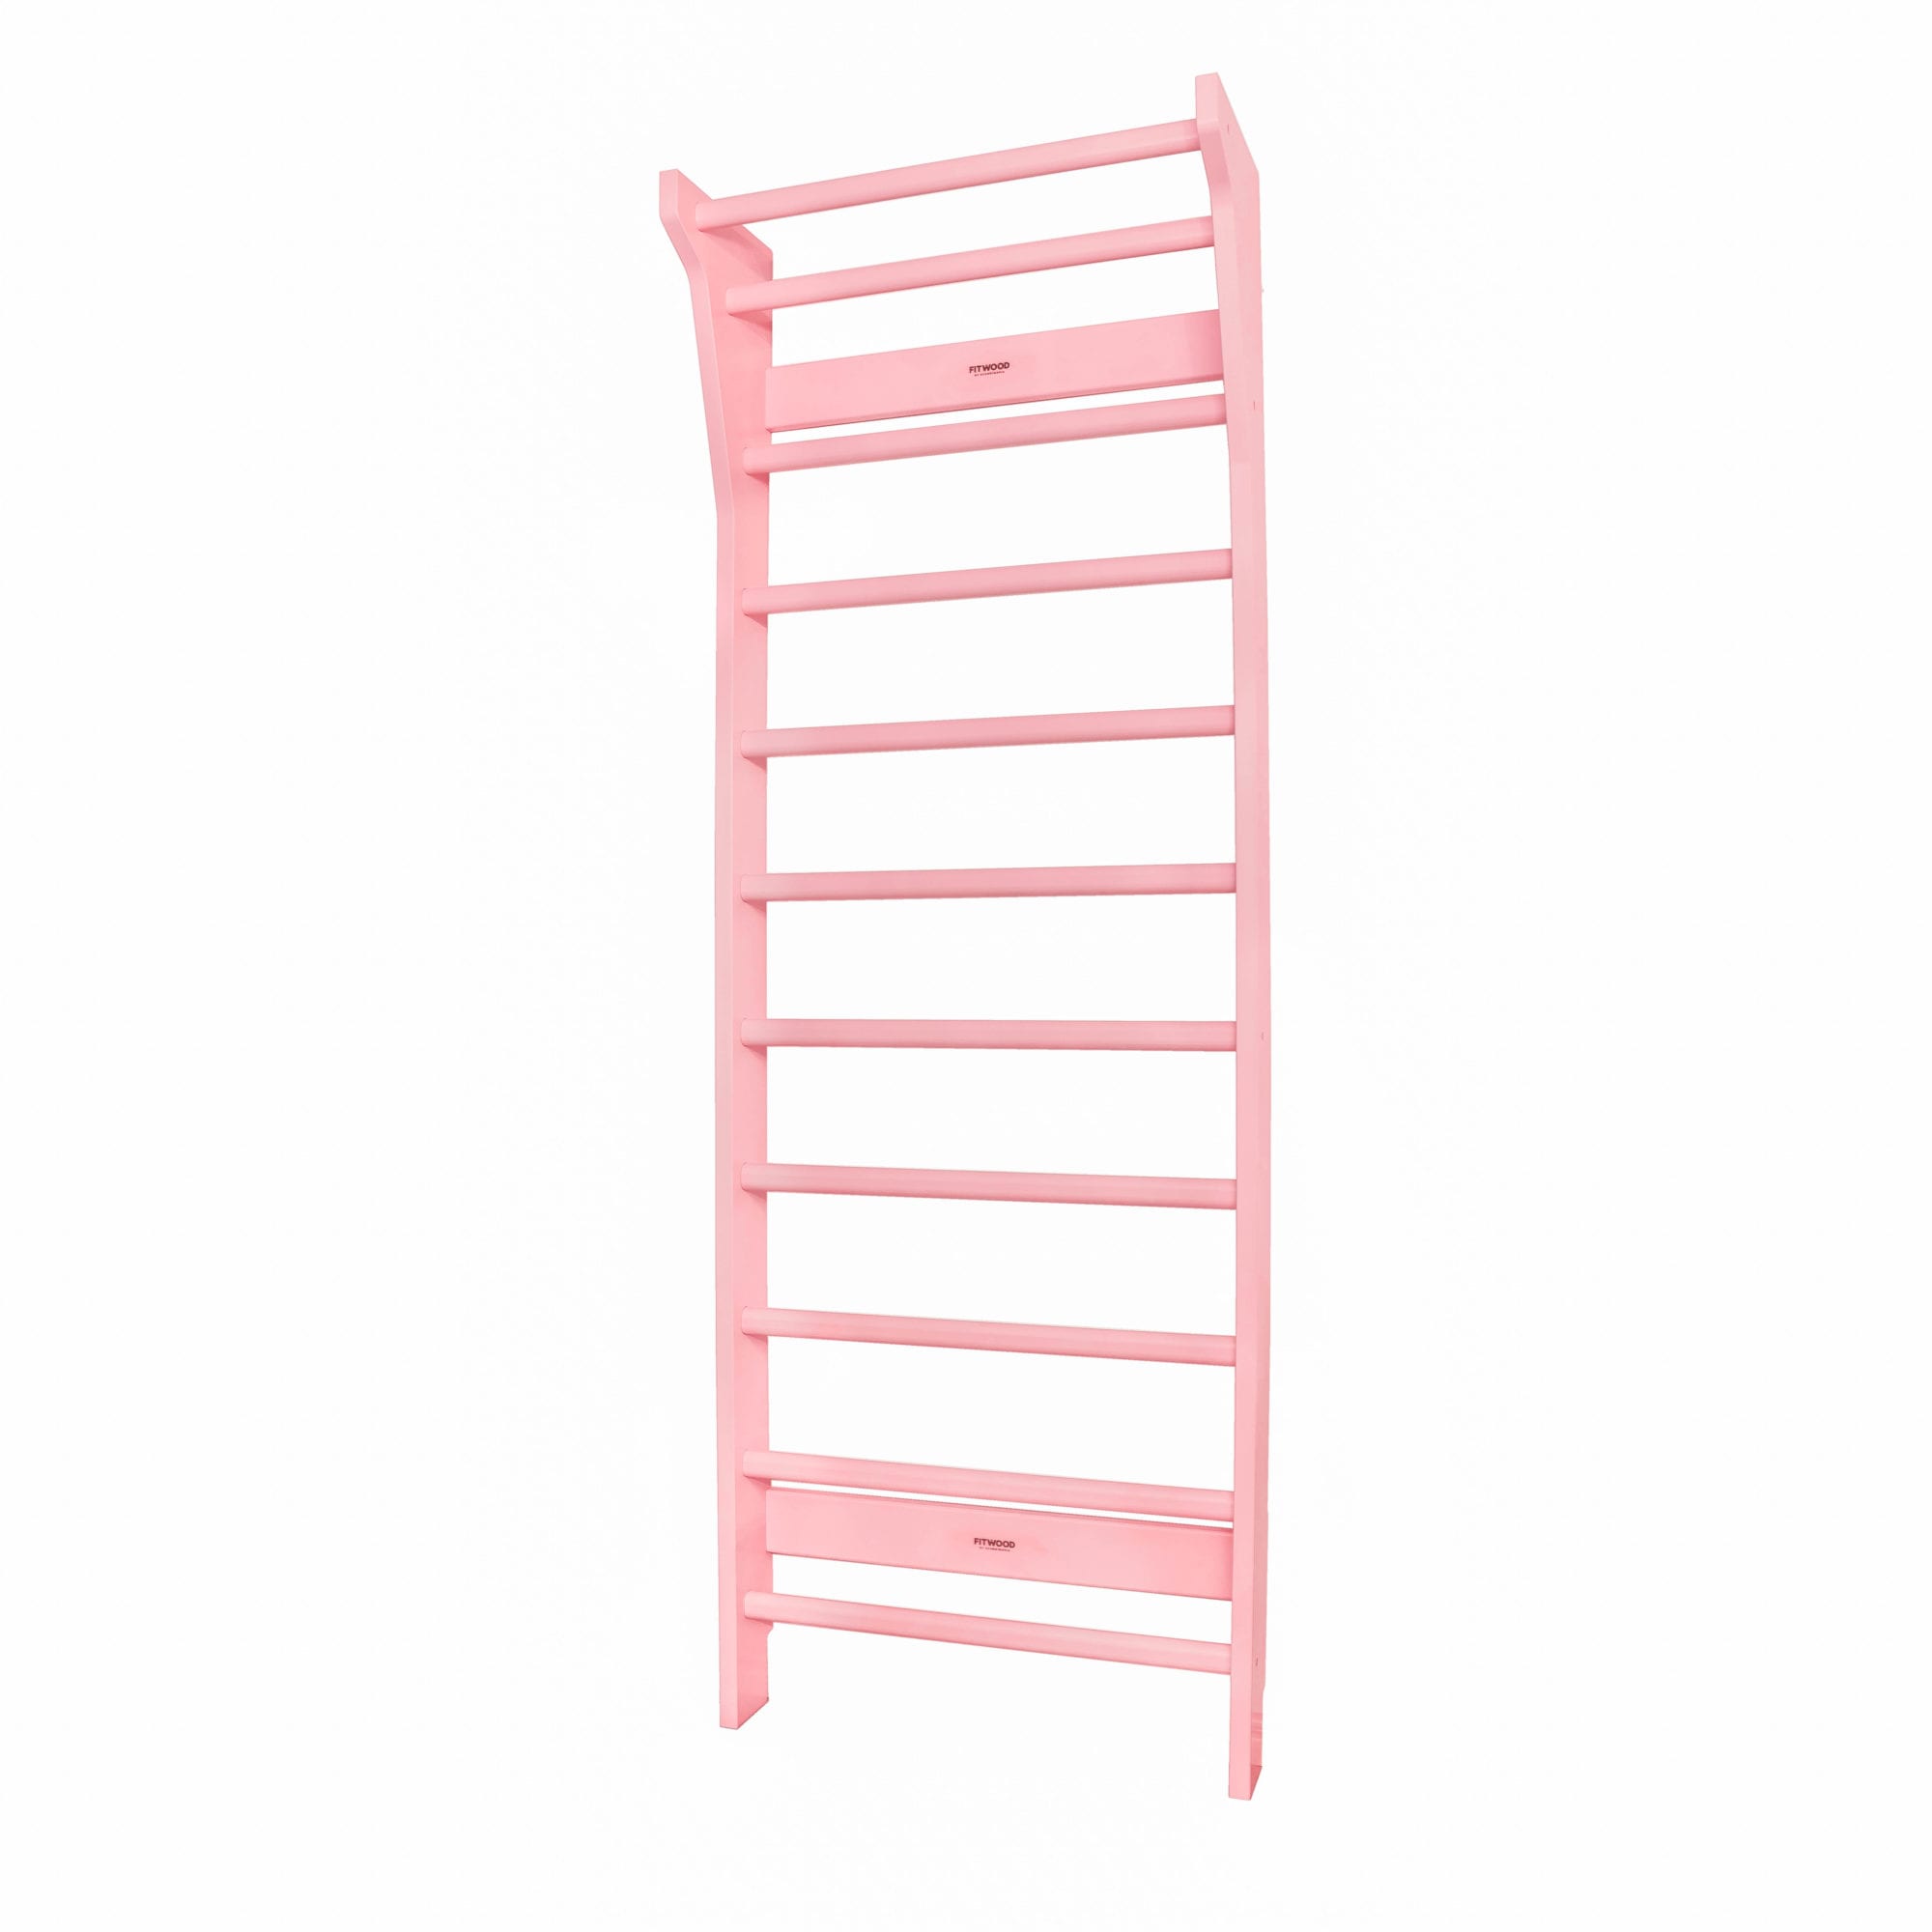 Upplyft pink - pink wall bars